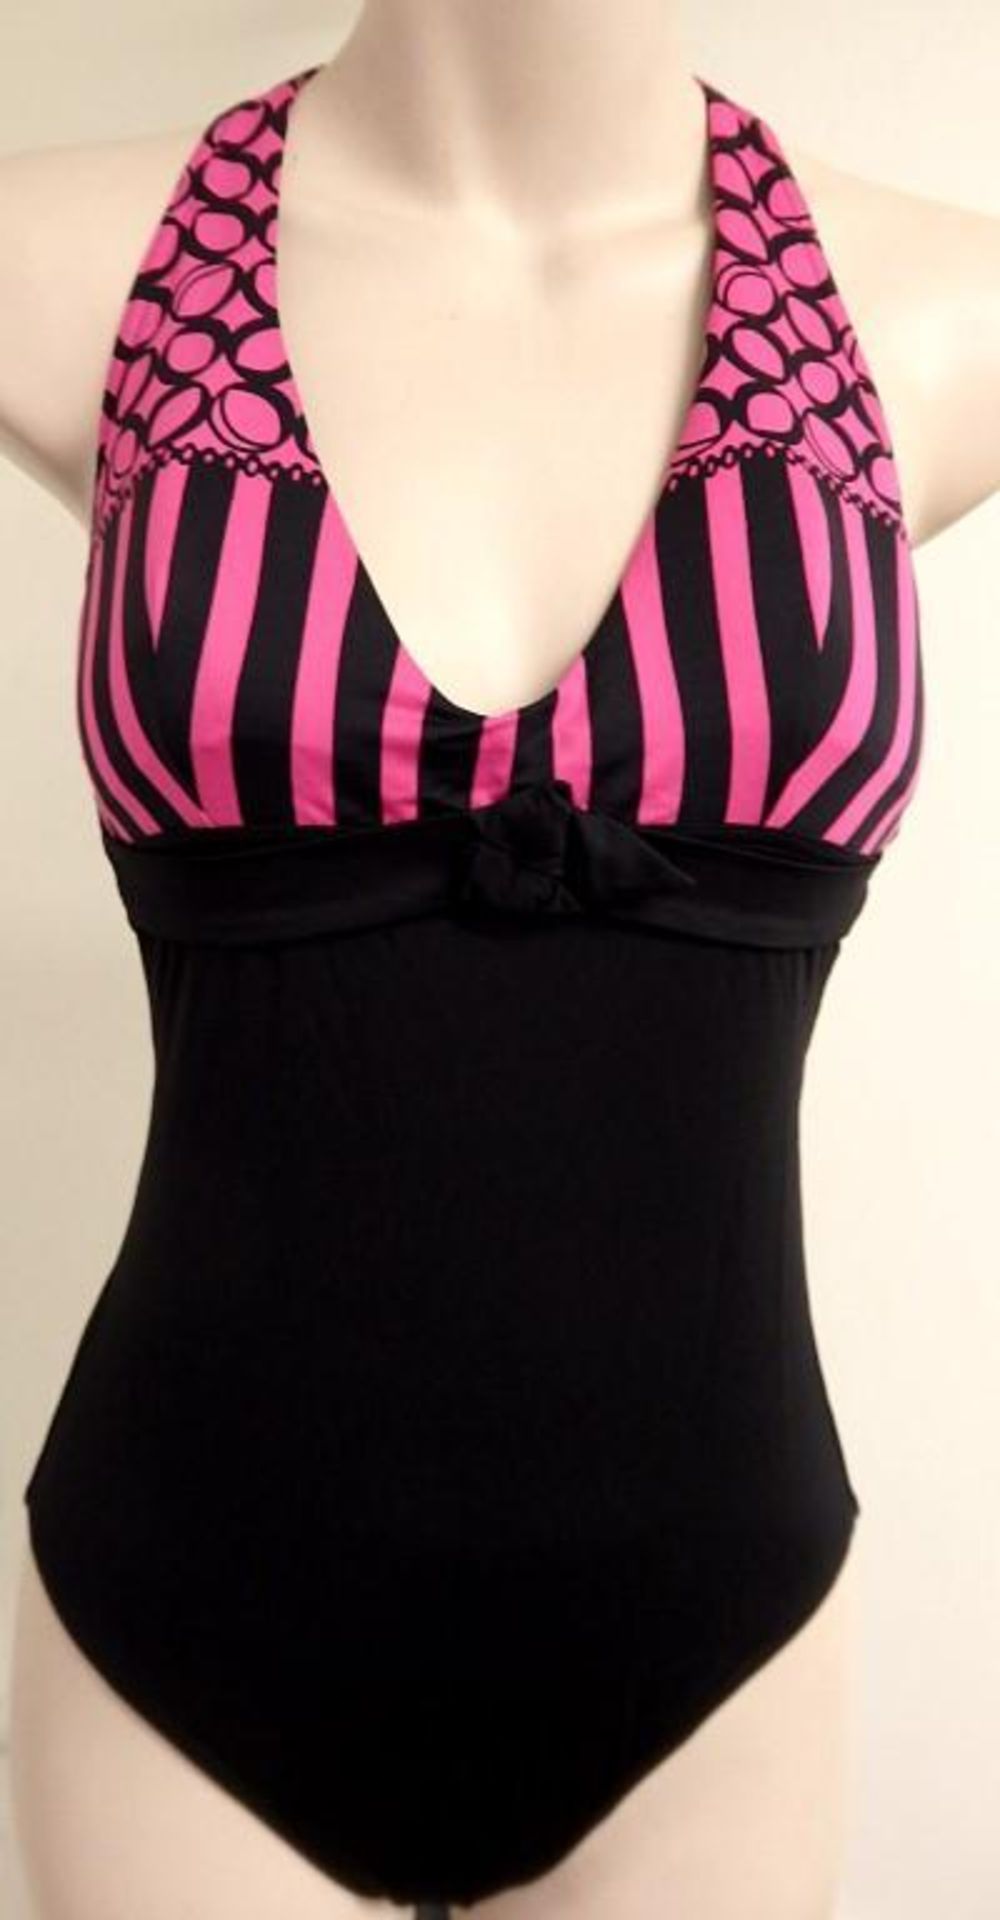 1 x Rasurel - Black/Pink patterned - Borneo Swimsuit - R20434 - Size 2C - UK 32 - Fr 85 - EU/Int 70 - Image 5 of 7